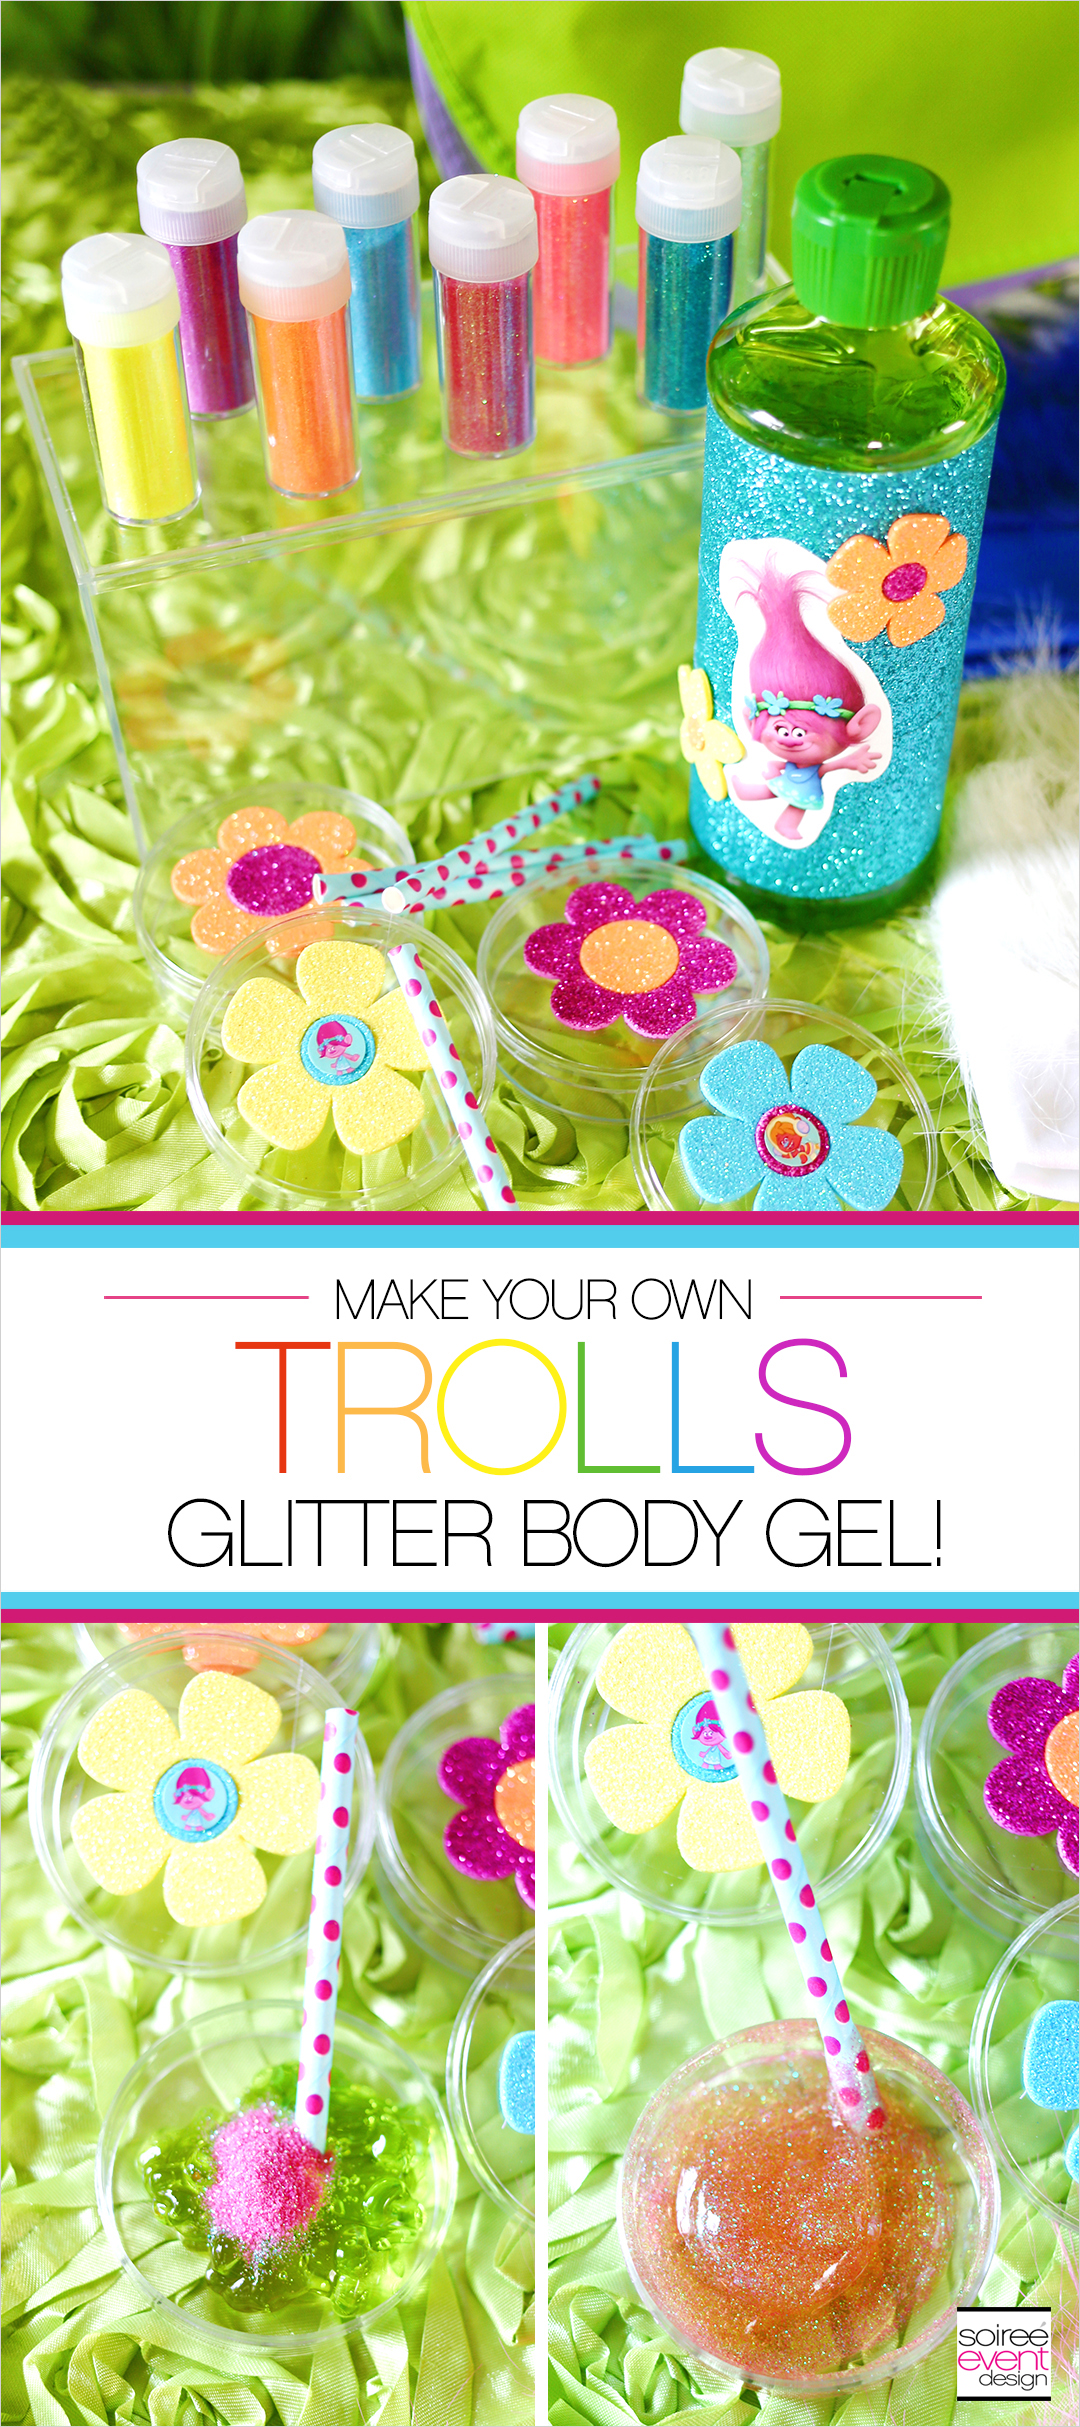 Trolls Party Ideas - DIY Trolls Glitter Body Gel